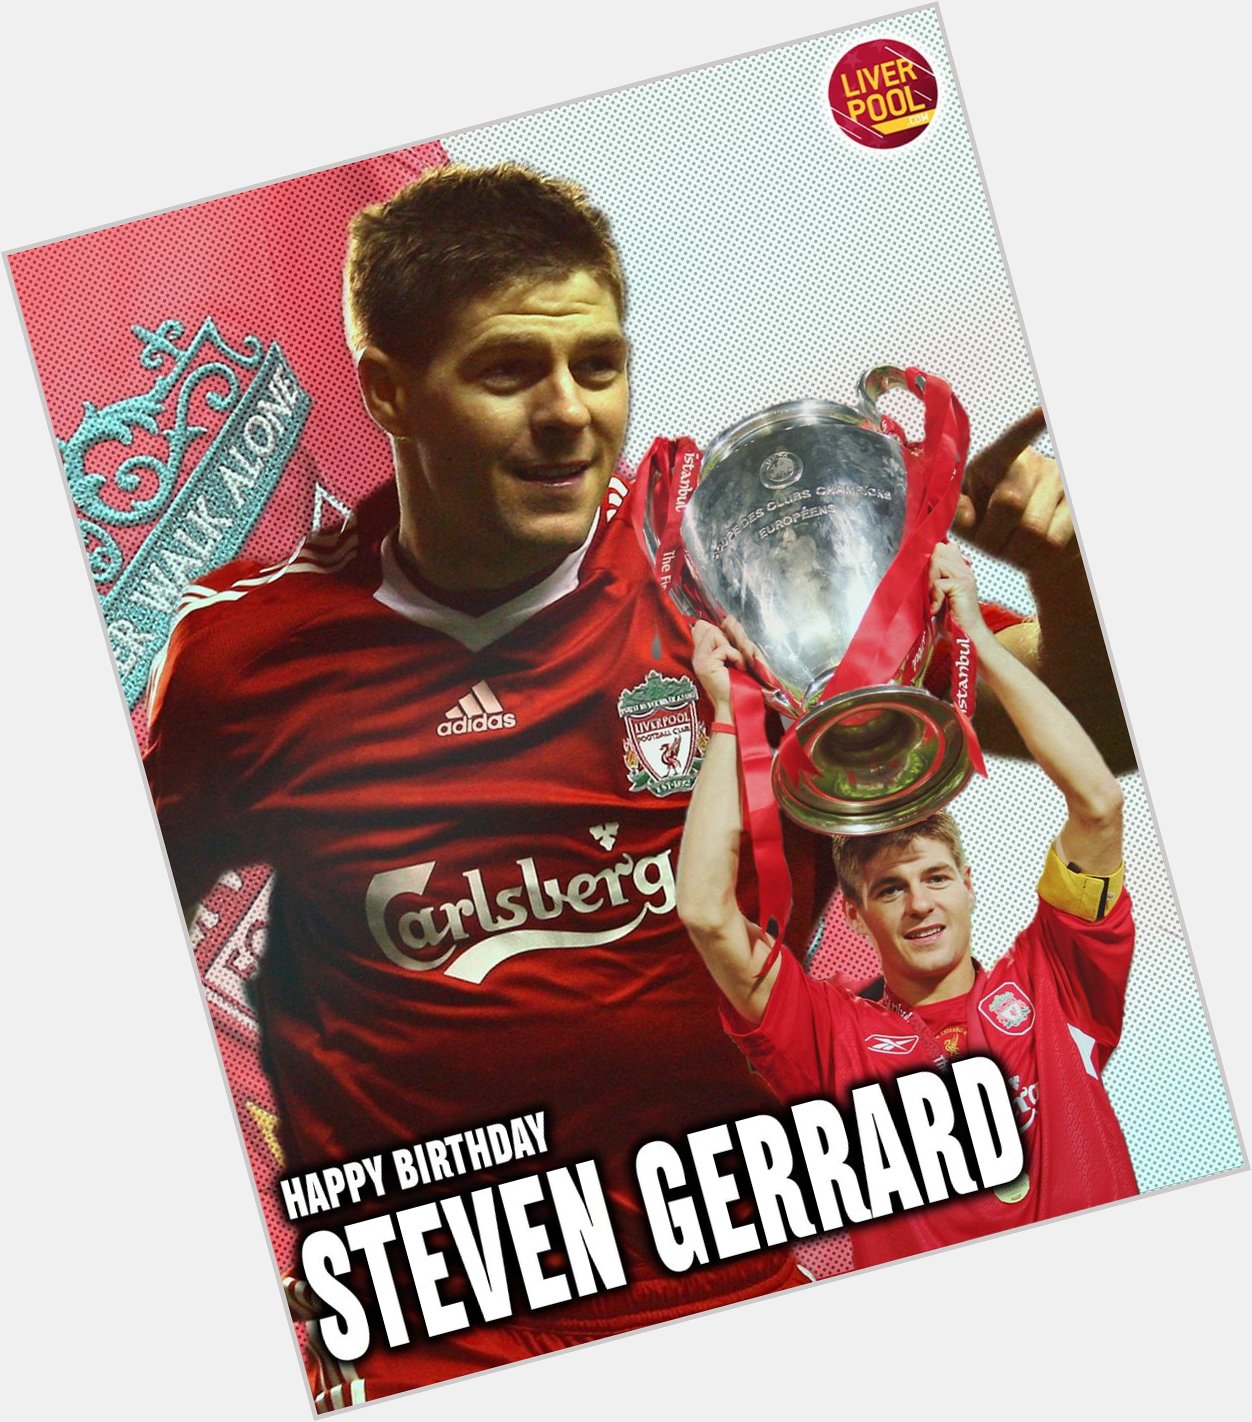  710 Games 186 Goals 11 major trophies

Happy birthday Steven Gerrard, a Legend 